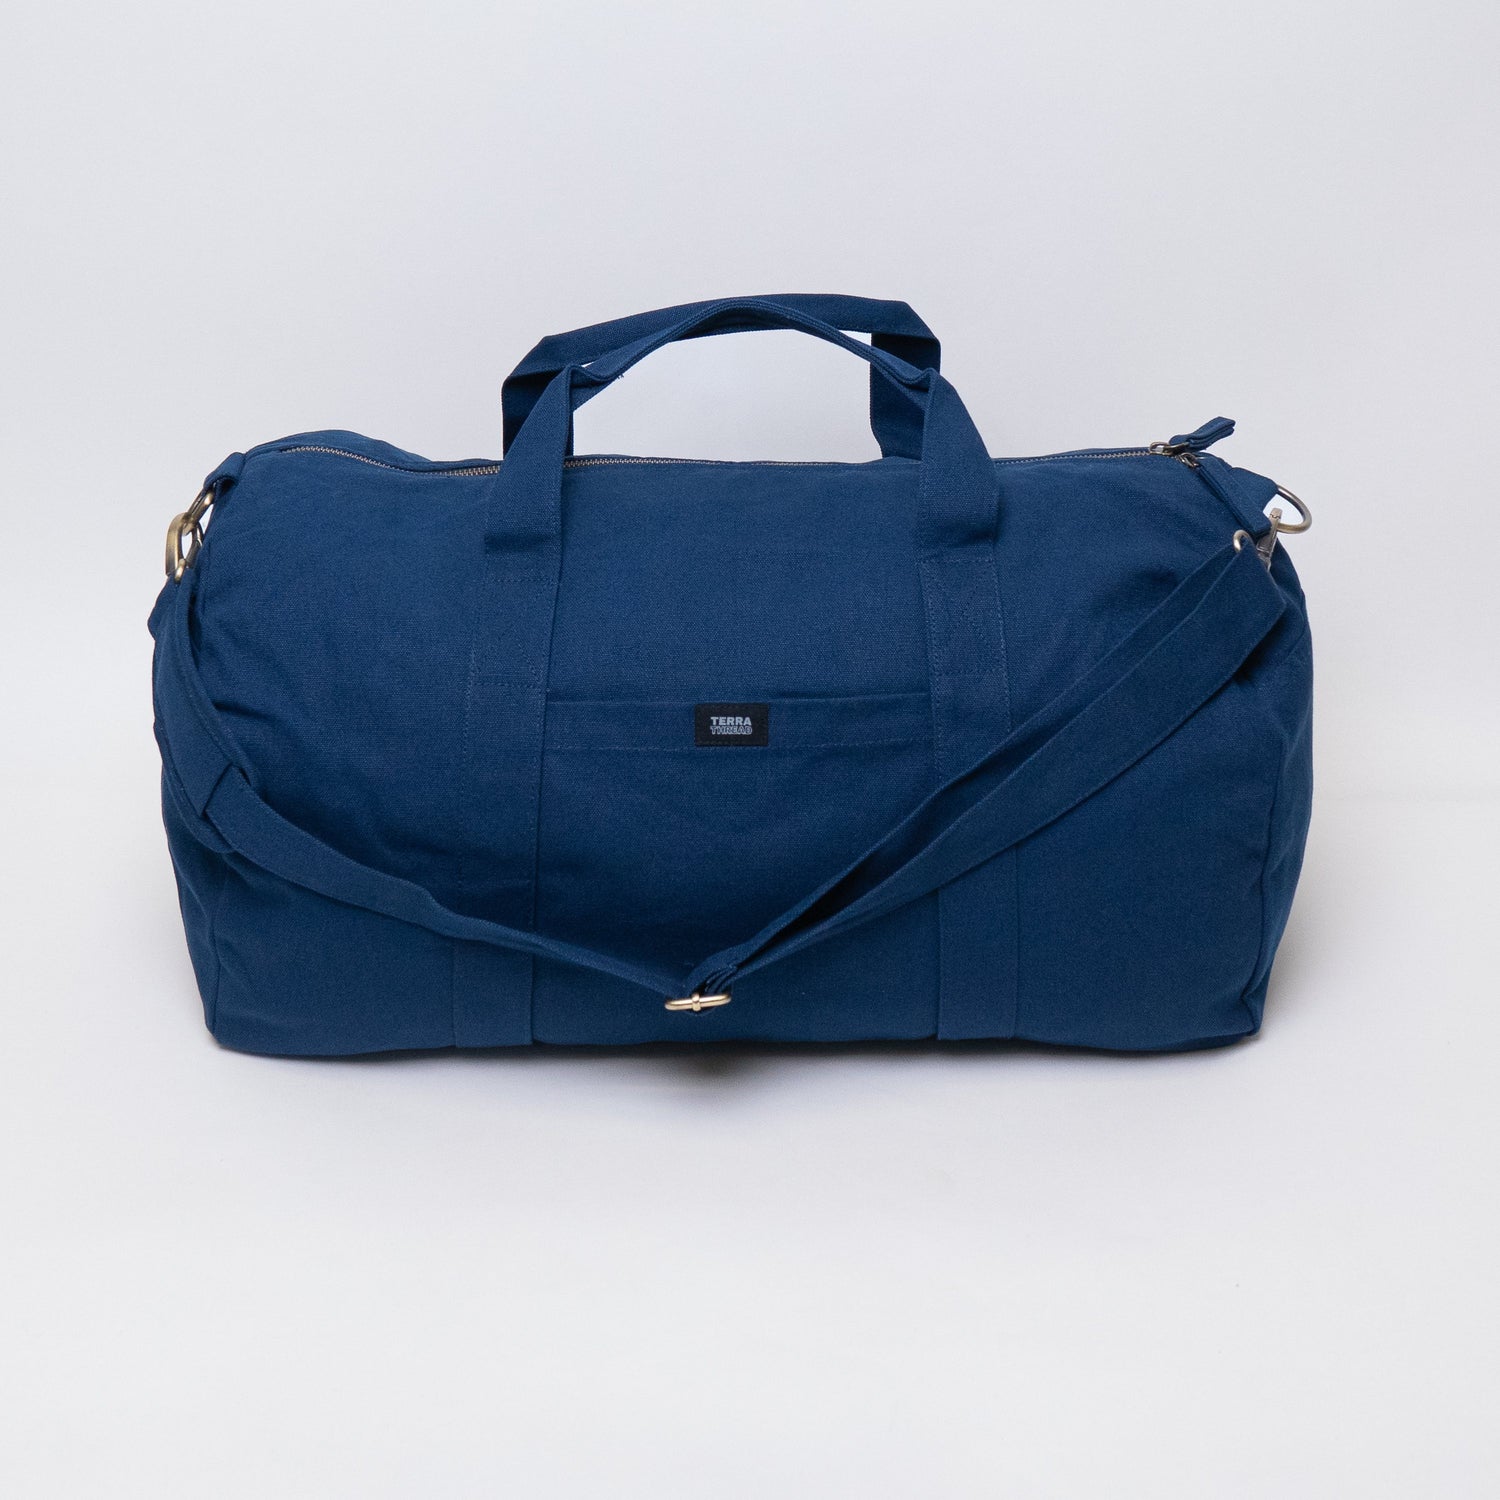 navy blue duffle bag